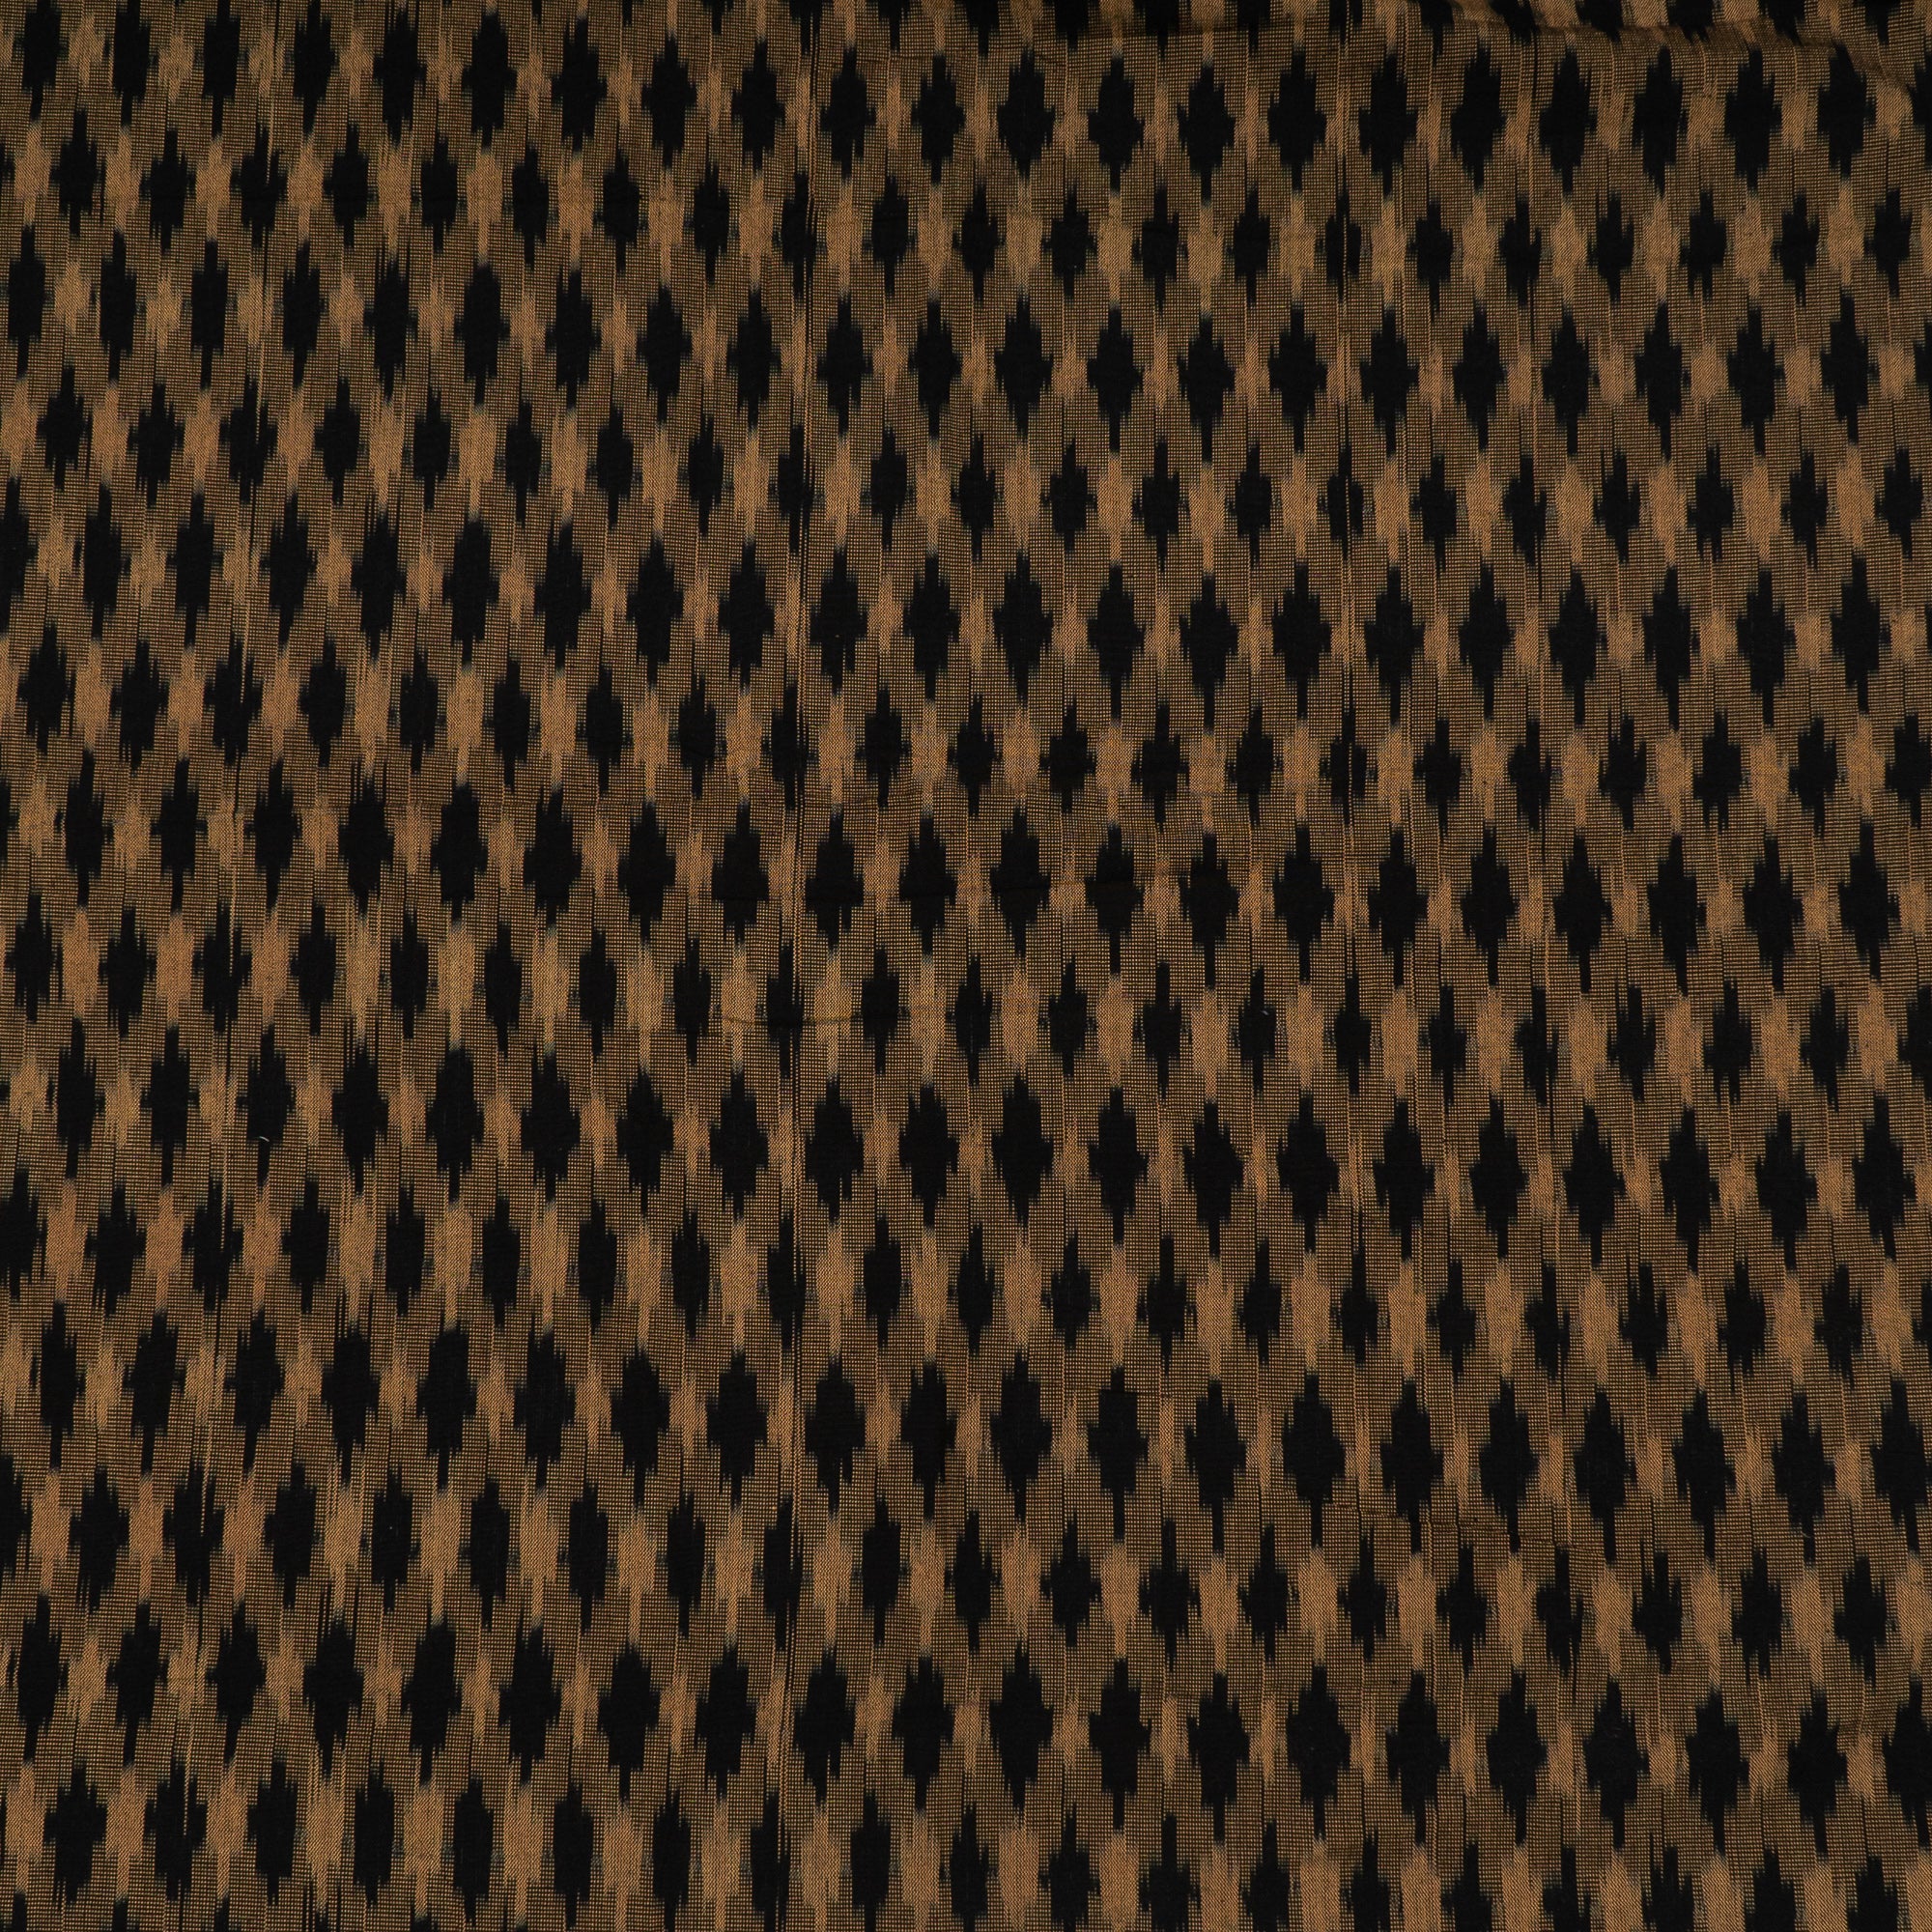 Brown & Black Thick Cotton Handloom Ikat (Sku: IKK-531)